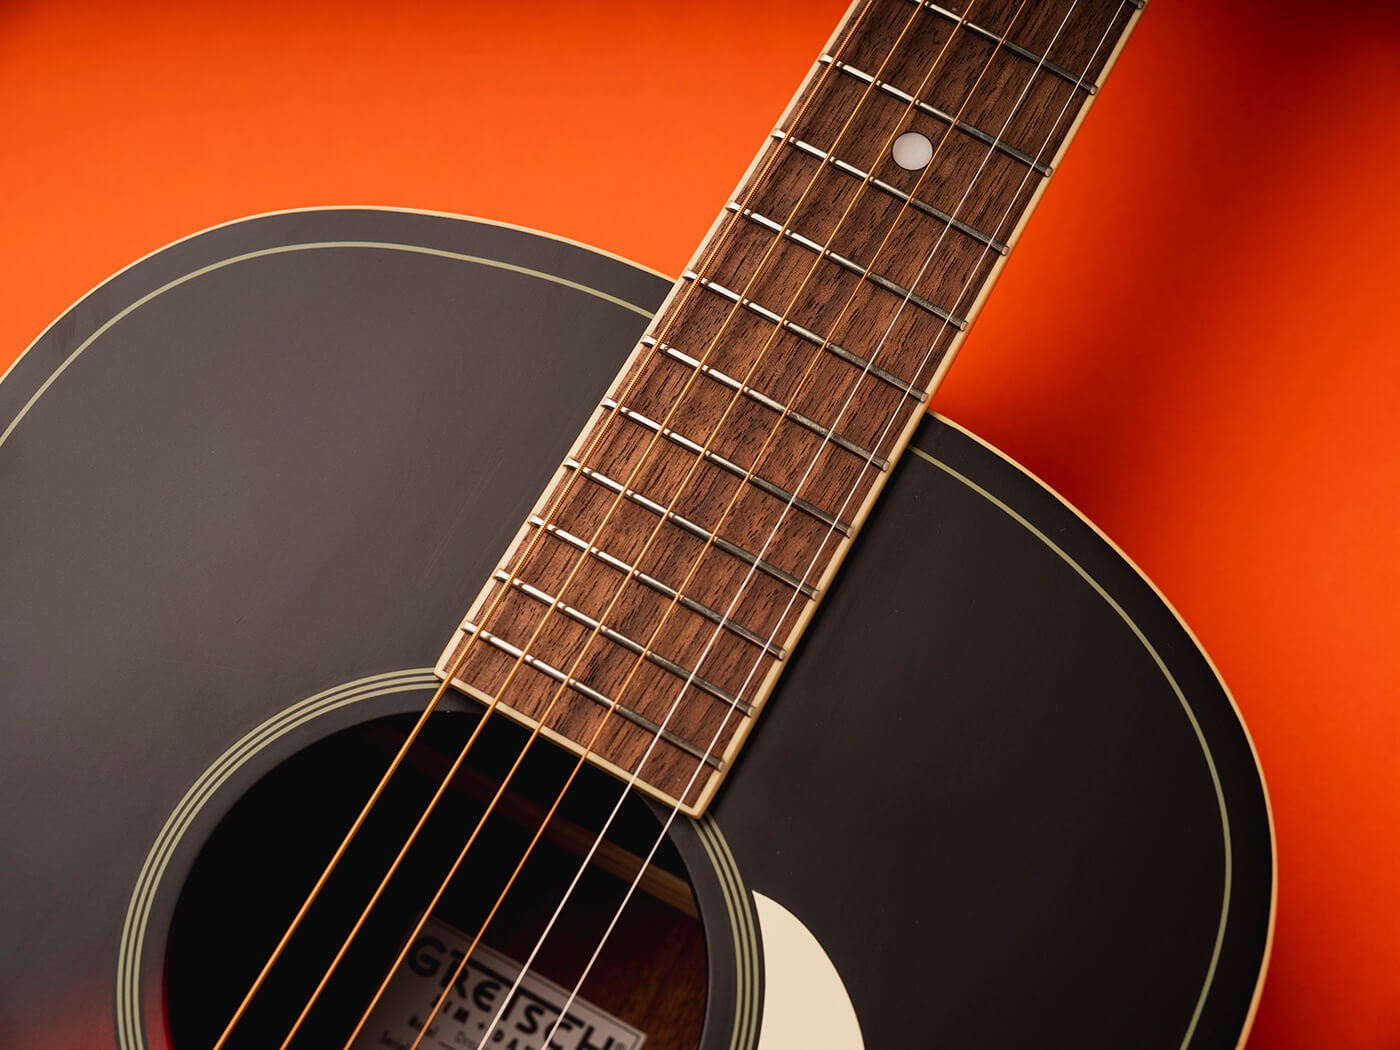 Gretsch Jim Dandy Dreadnought acoustic guitar, image by Adam Gasson